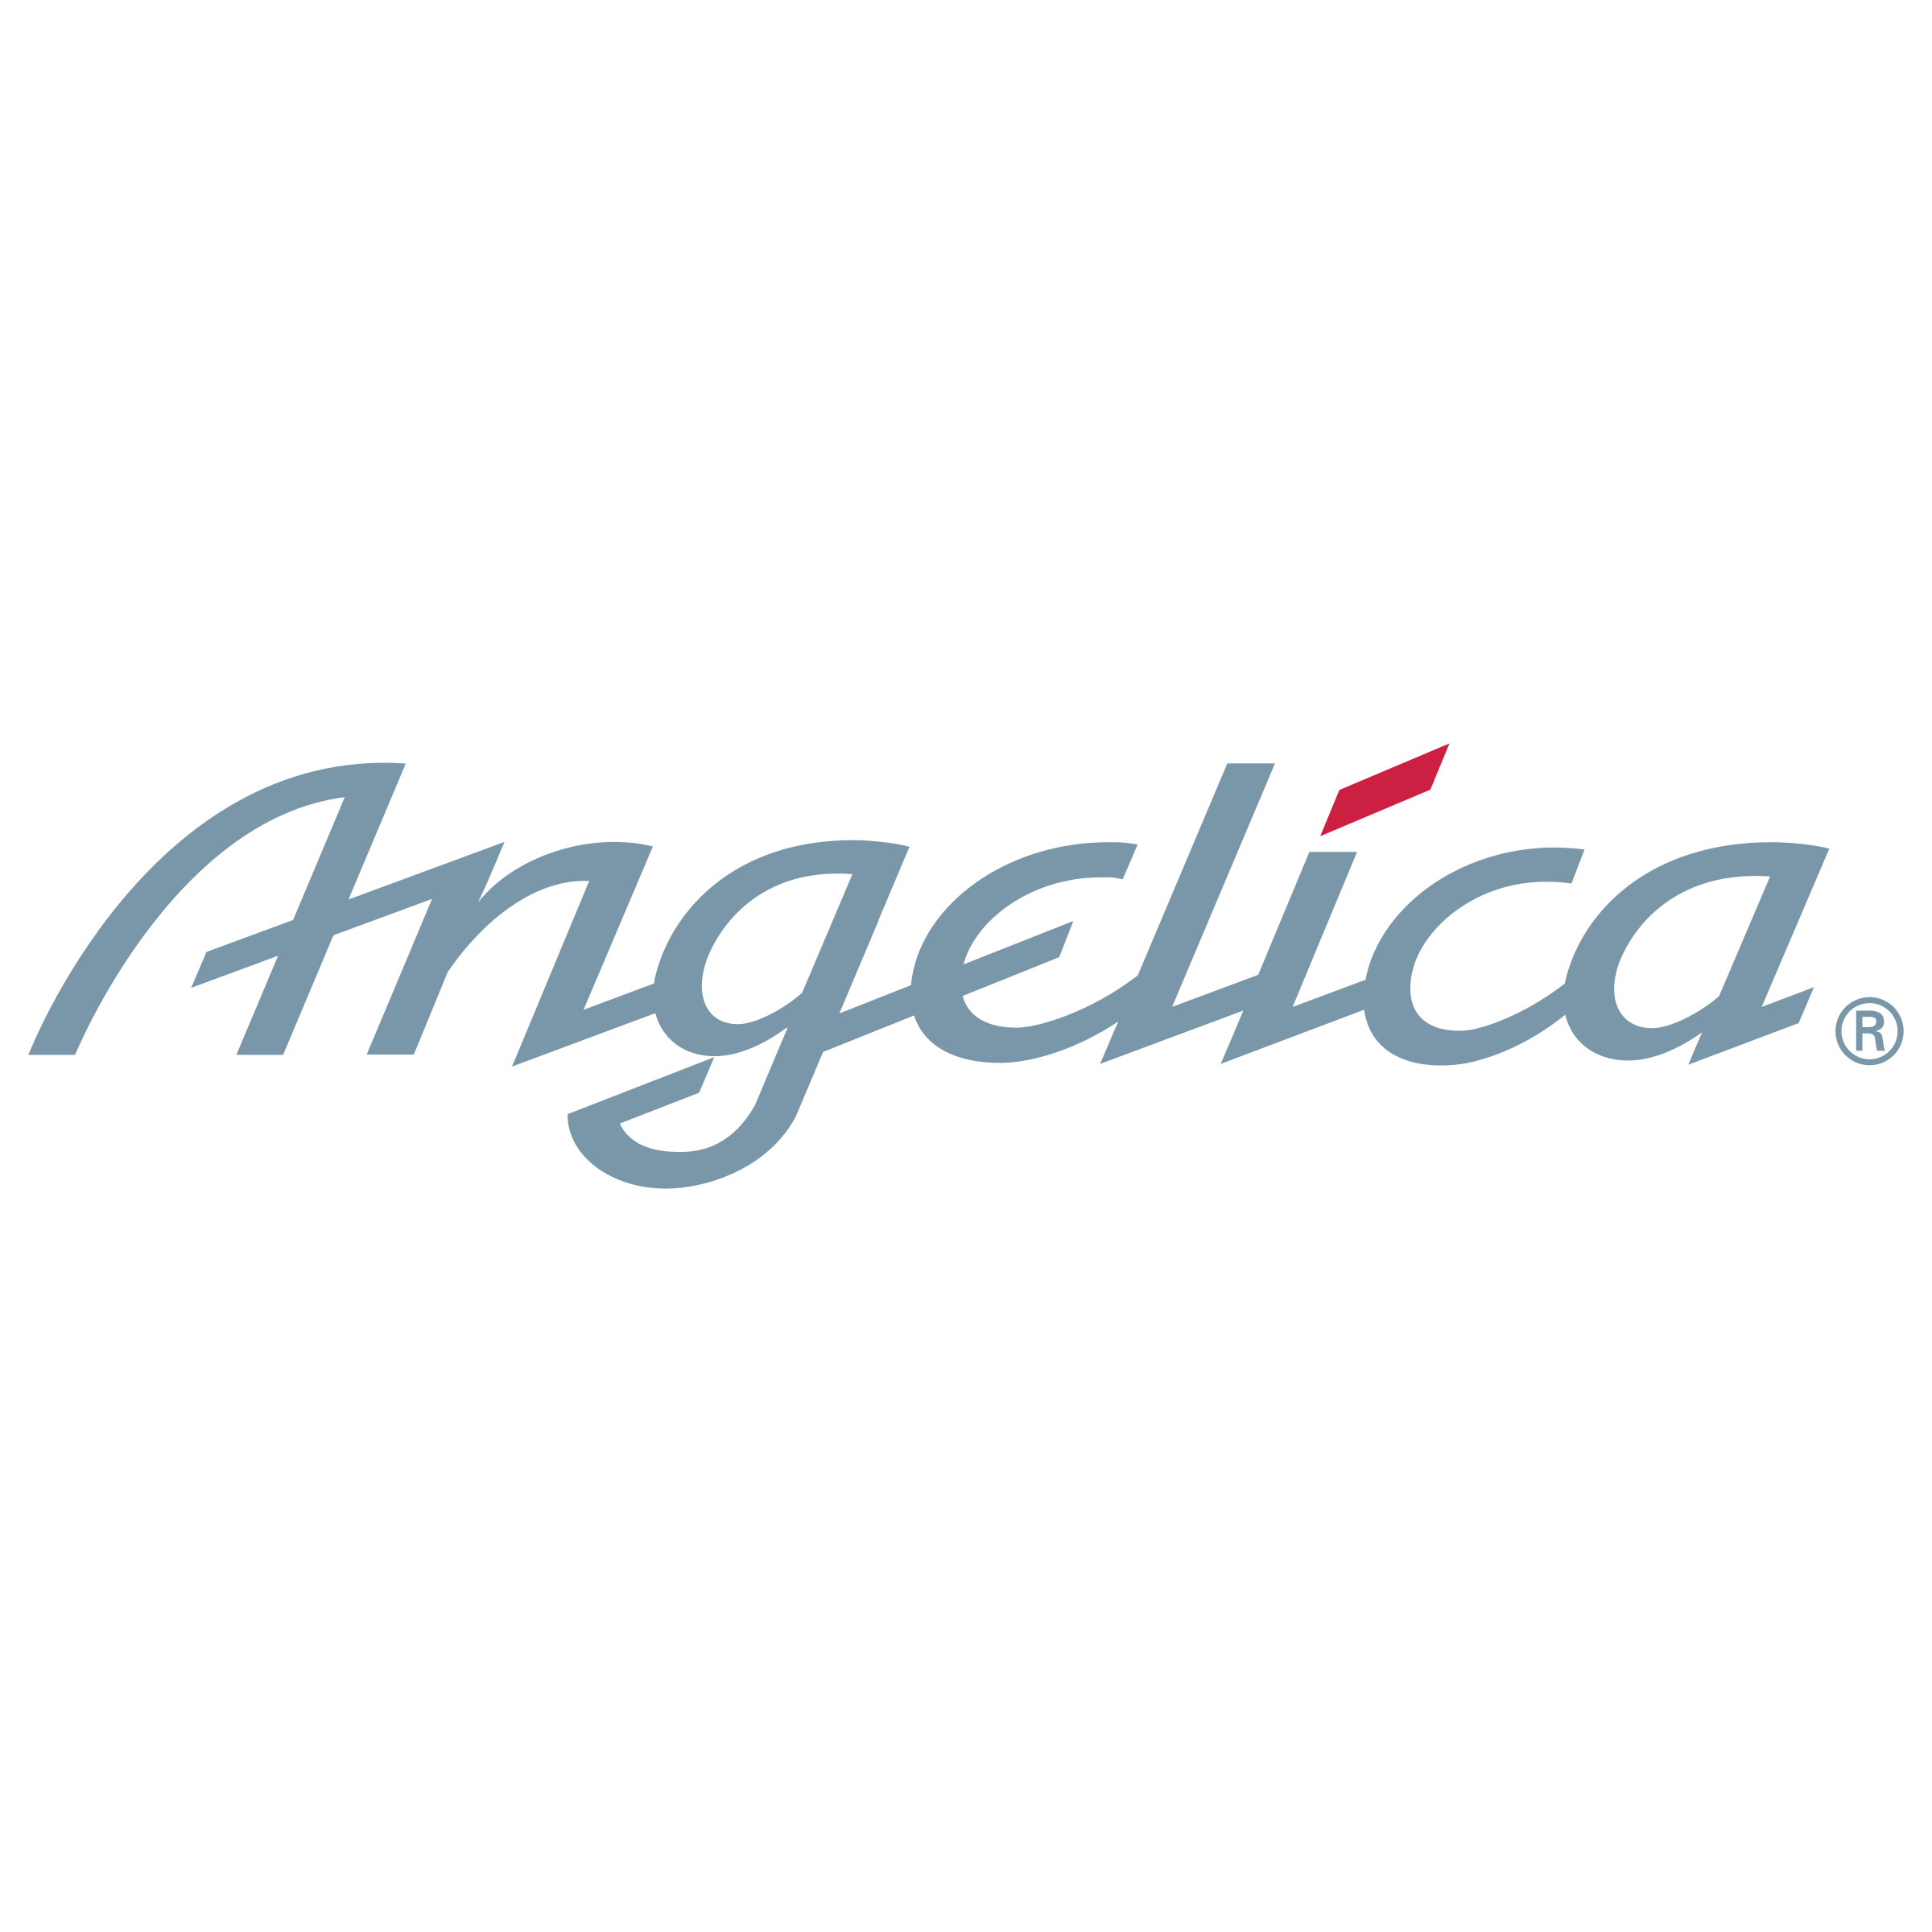 Angelica Logo - Angelica Logo PNG Transparent & SVG Vector - Freebie Supply